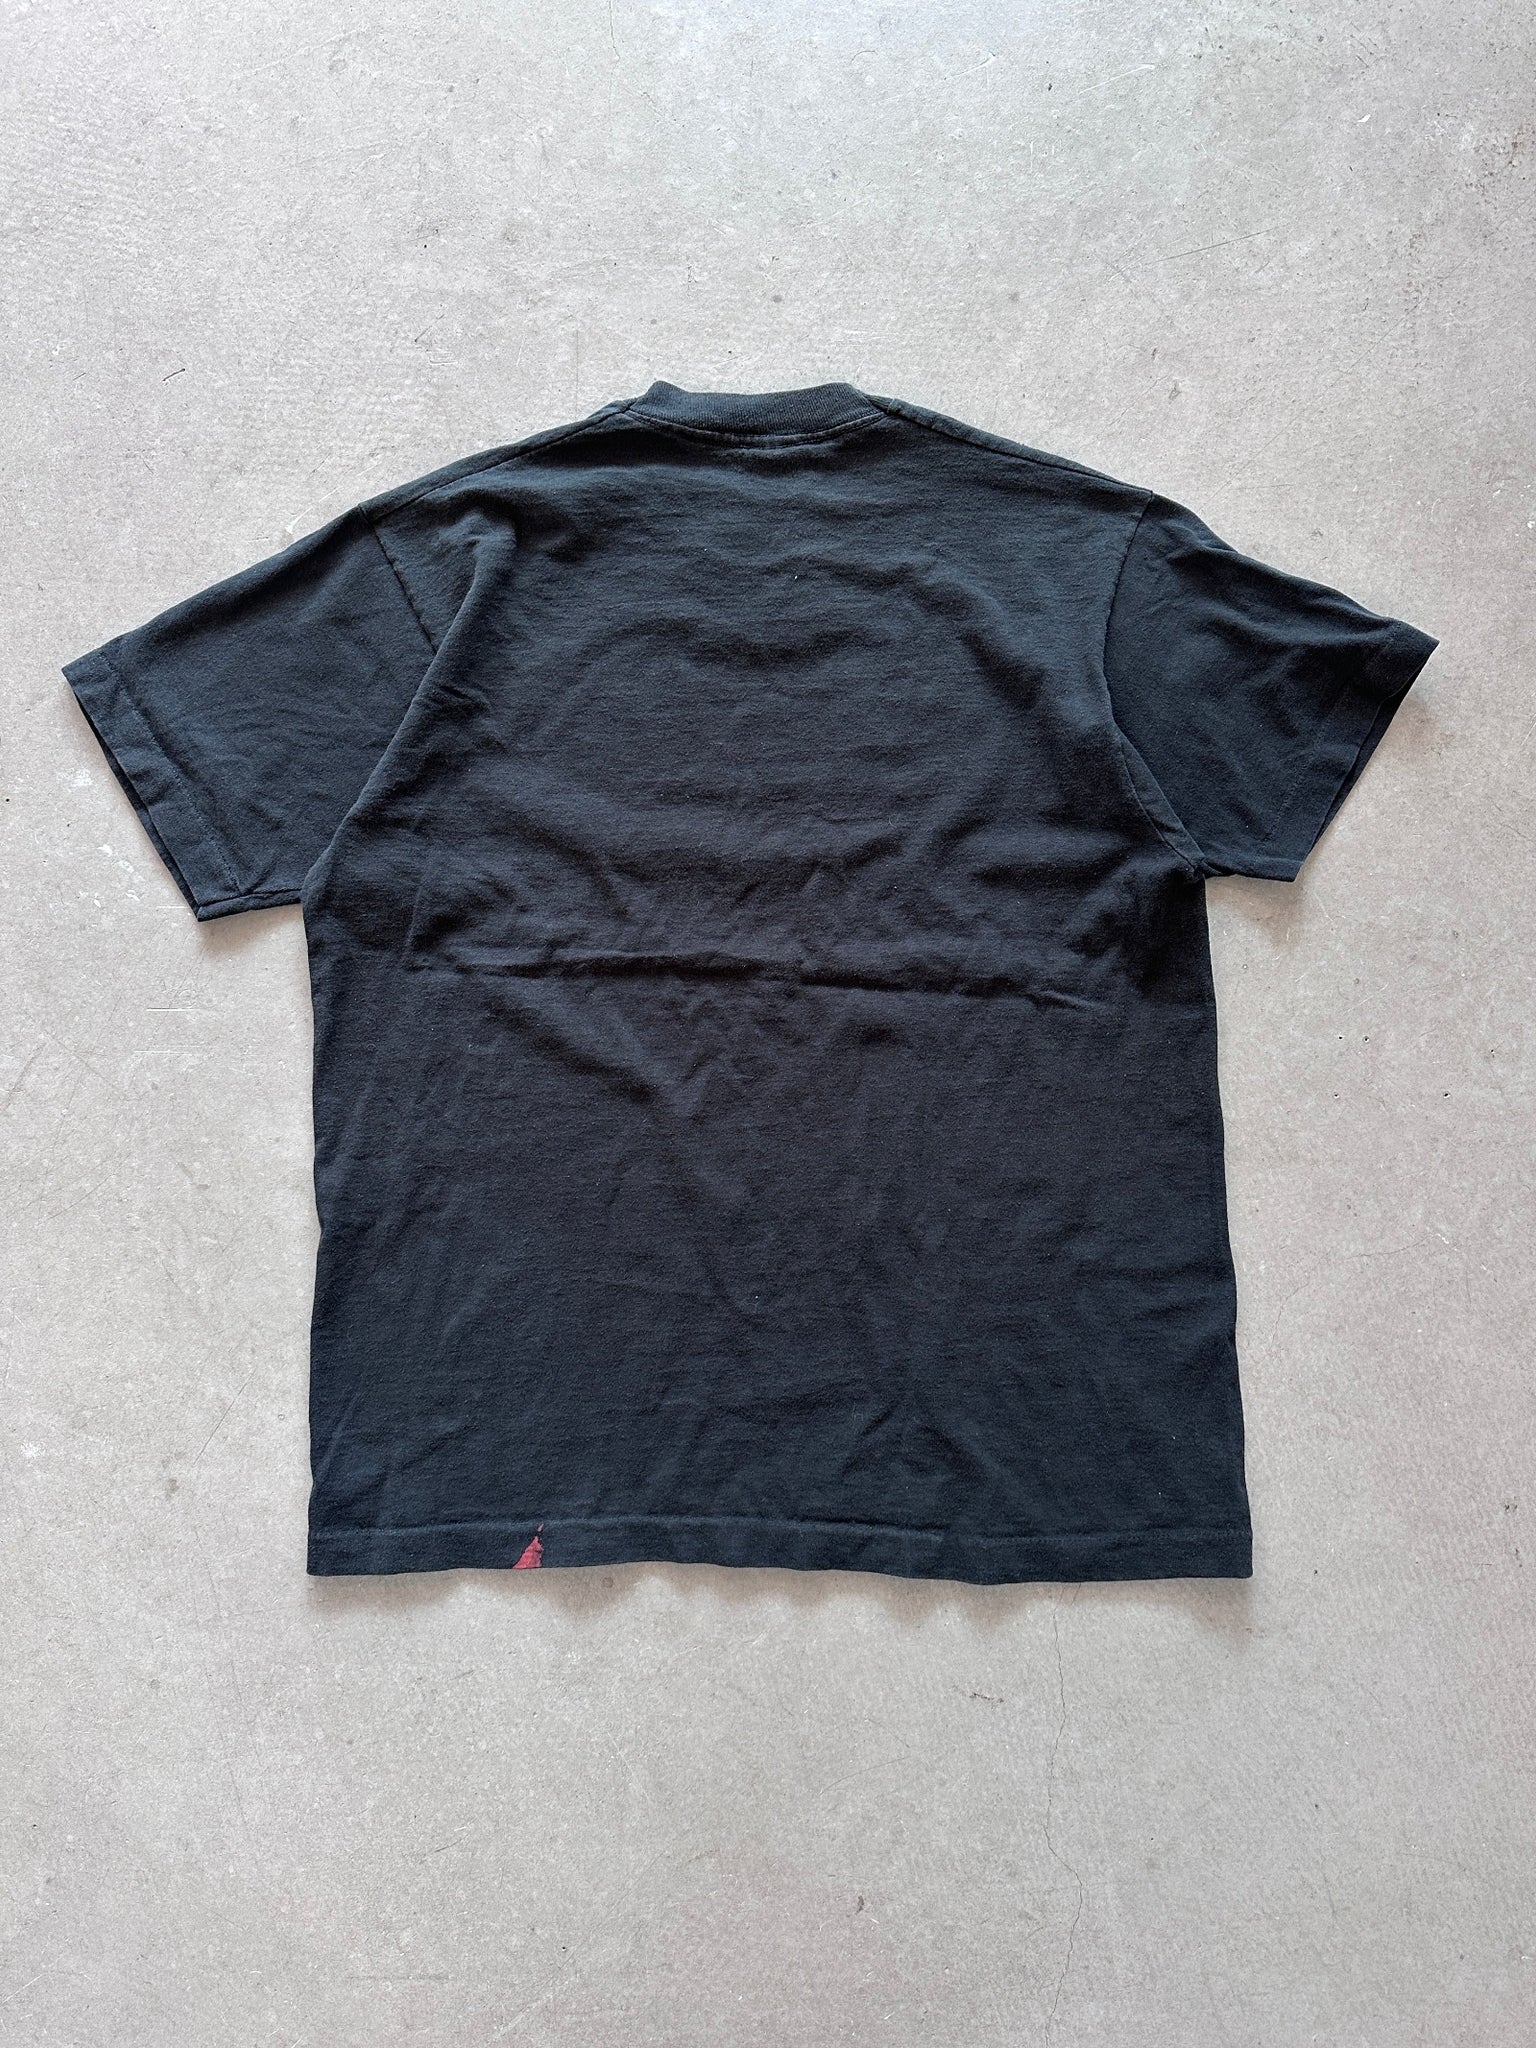 1991 Paris NYE Party T-Shirt - XL